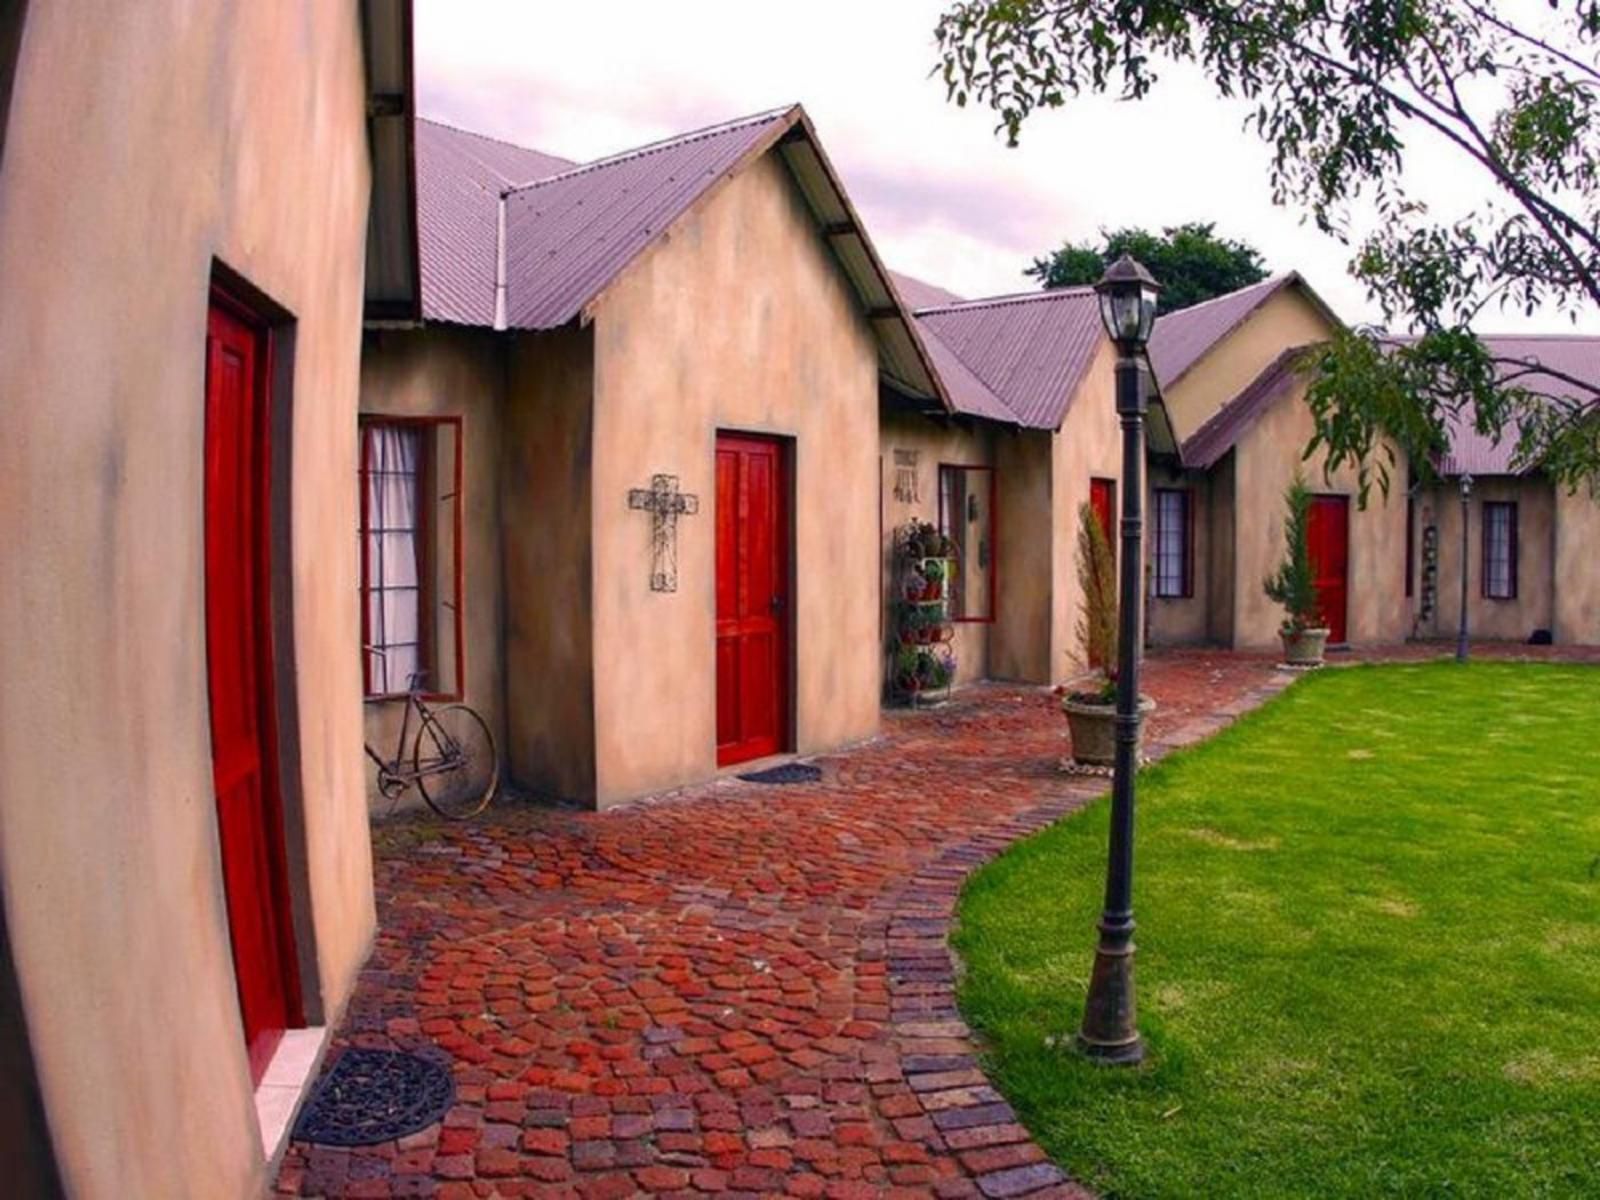 Villa Afriq Lydenburg Mpumalanga South Africa House, Building, Architecture